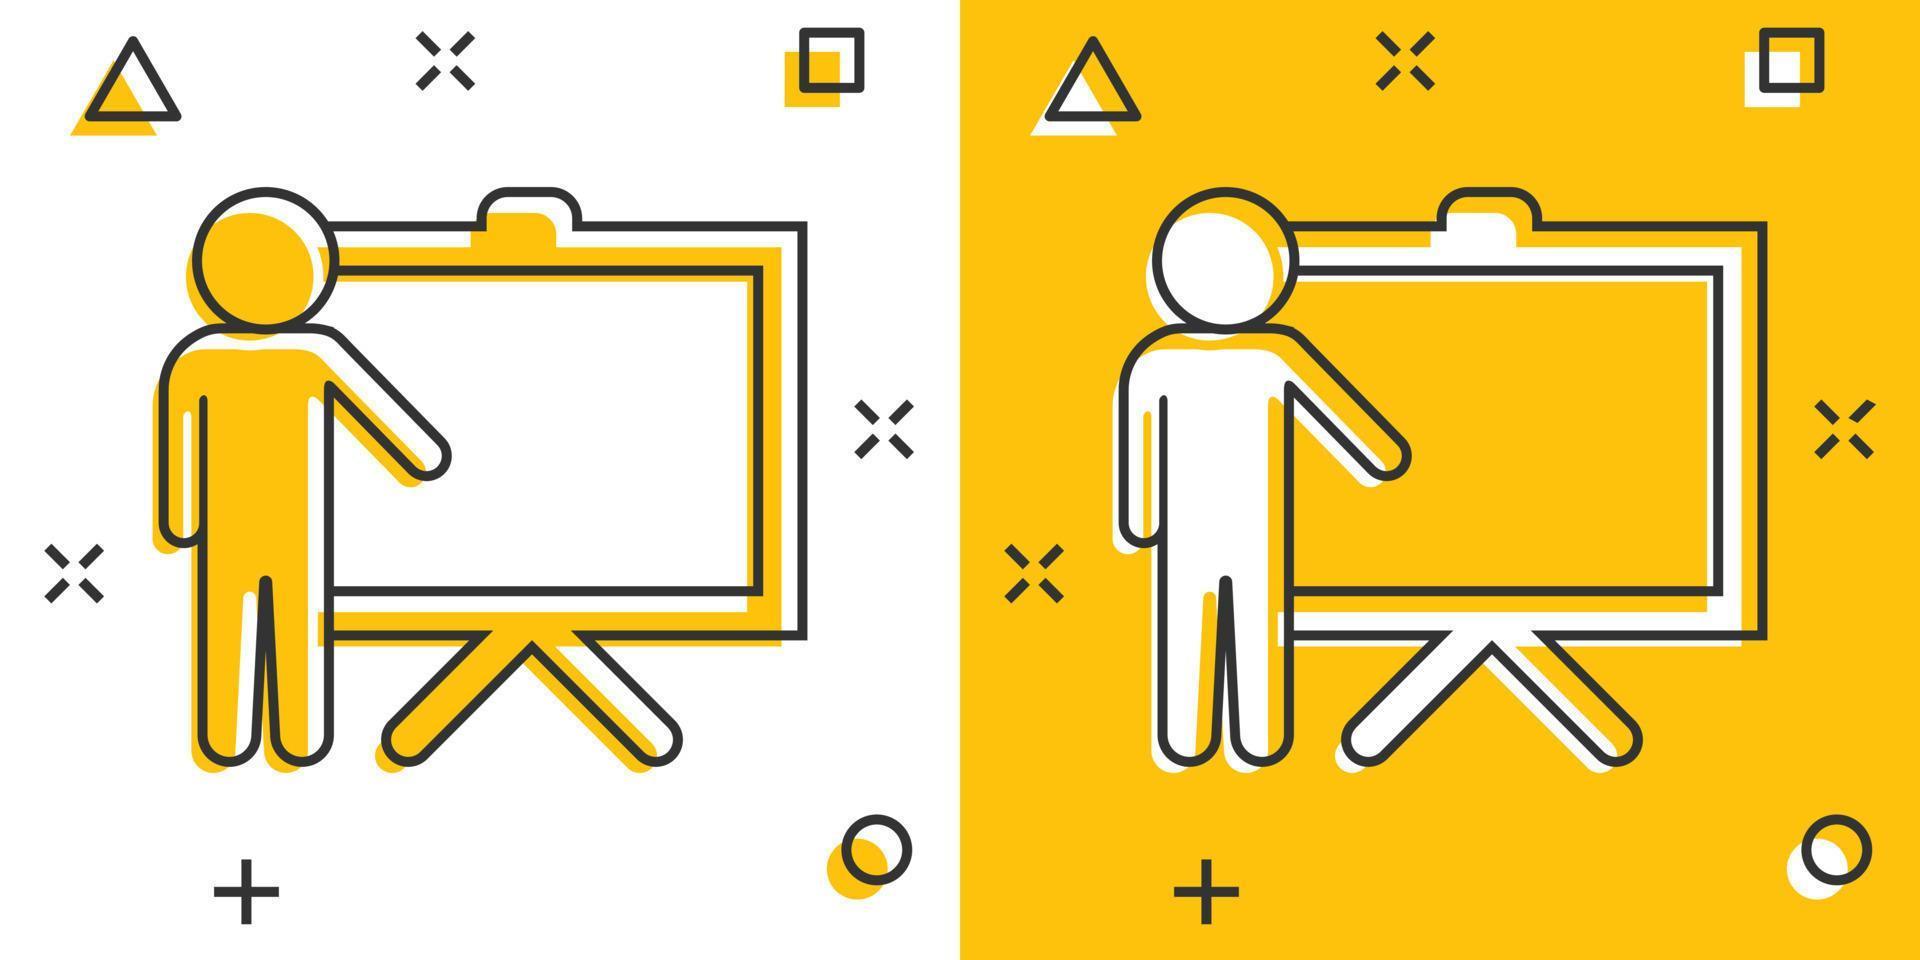 Training education icon in comic style. People seminar vector cartoon illustration pictogram. School classroom lesson business concept splash effect.